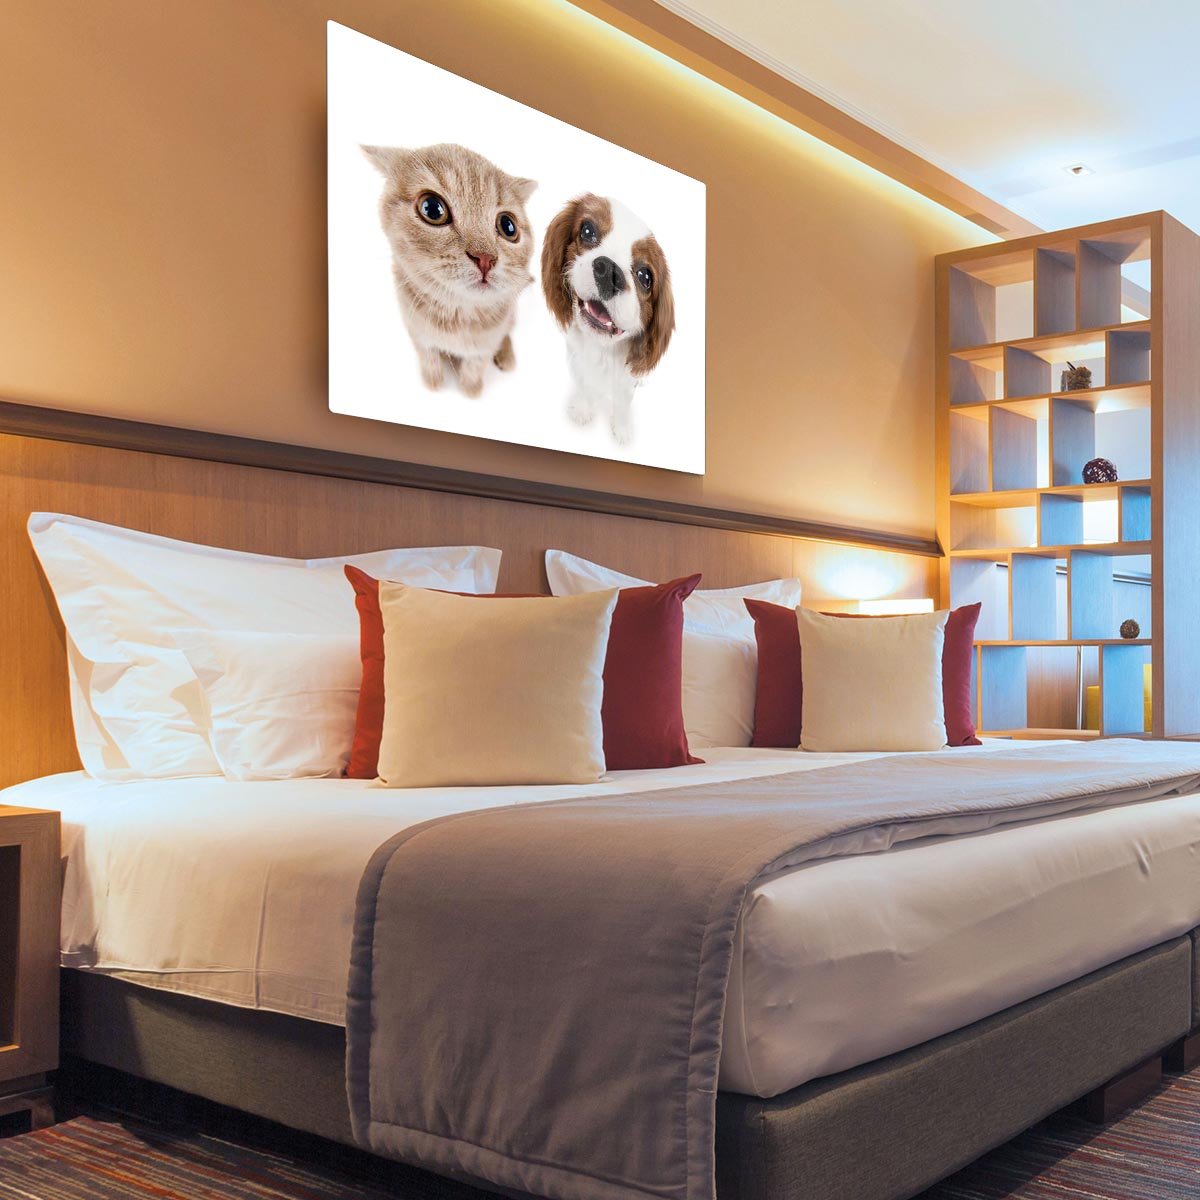 The beautiful brown little kitten with dog HD Metal Print - Canvas Art Rocks - 3